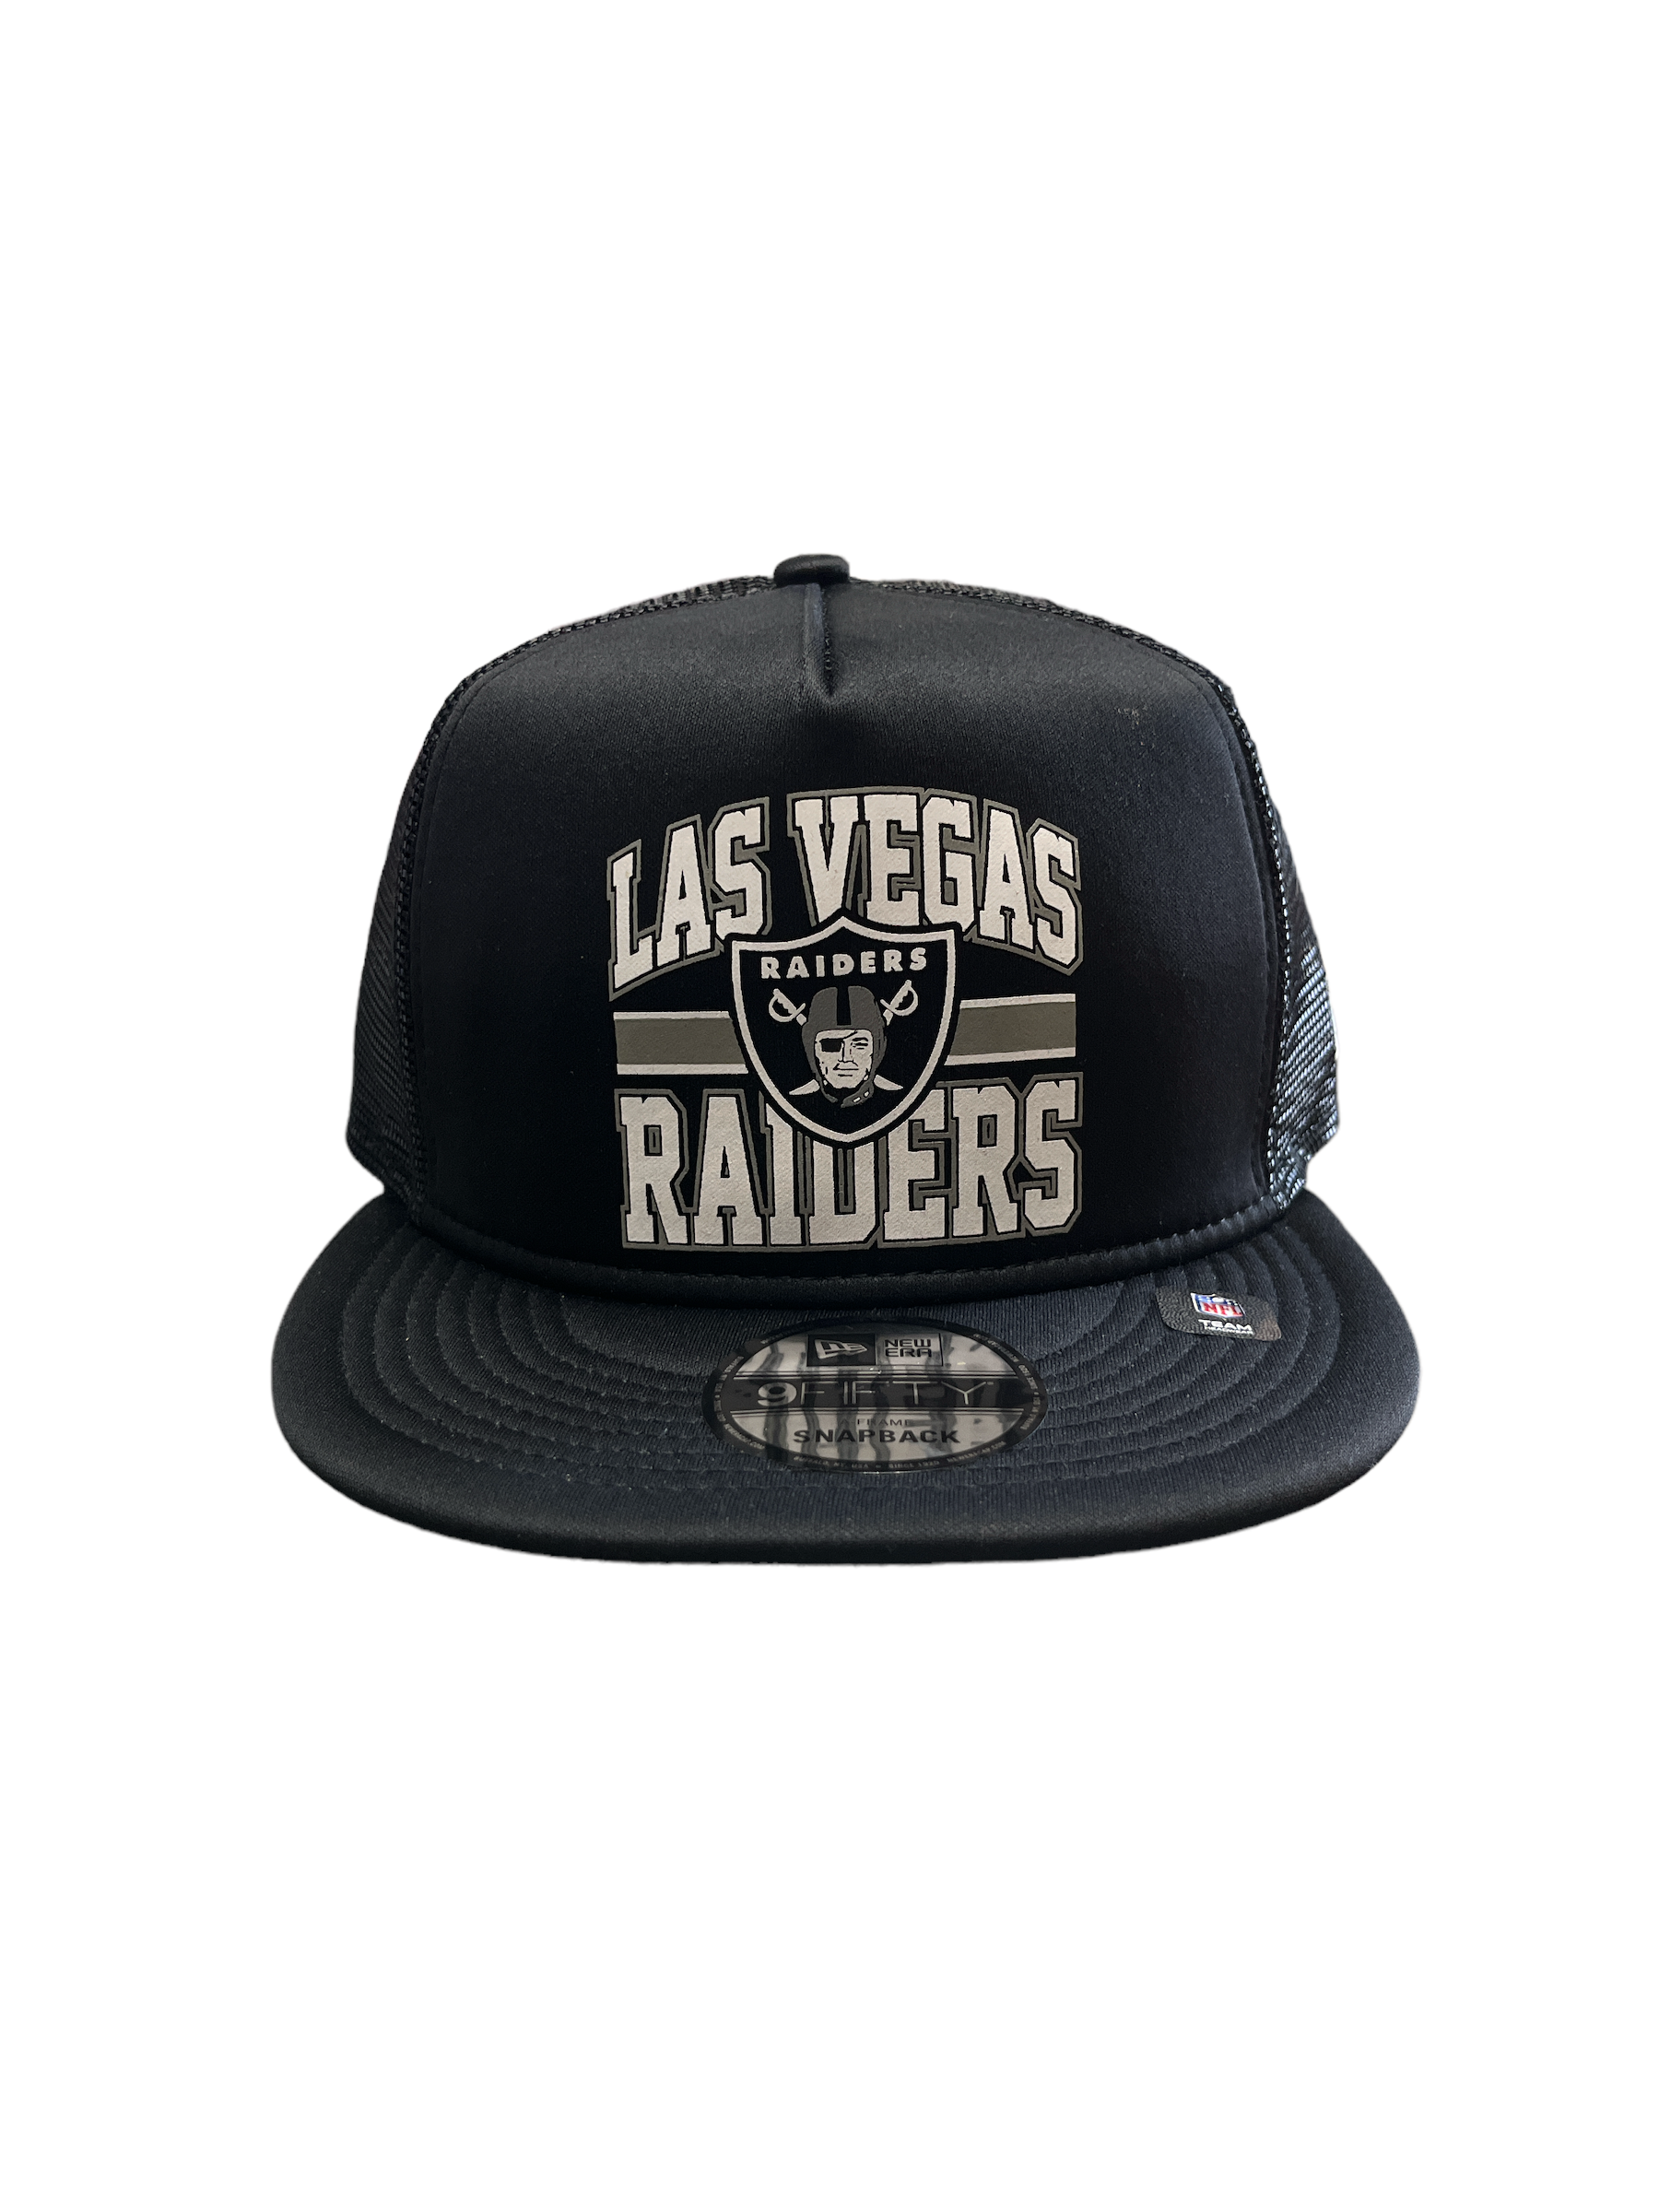 lv raiders snapback hat